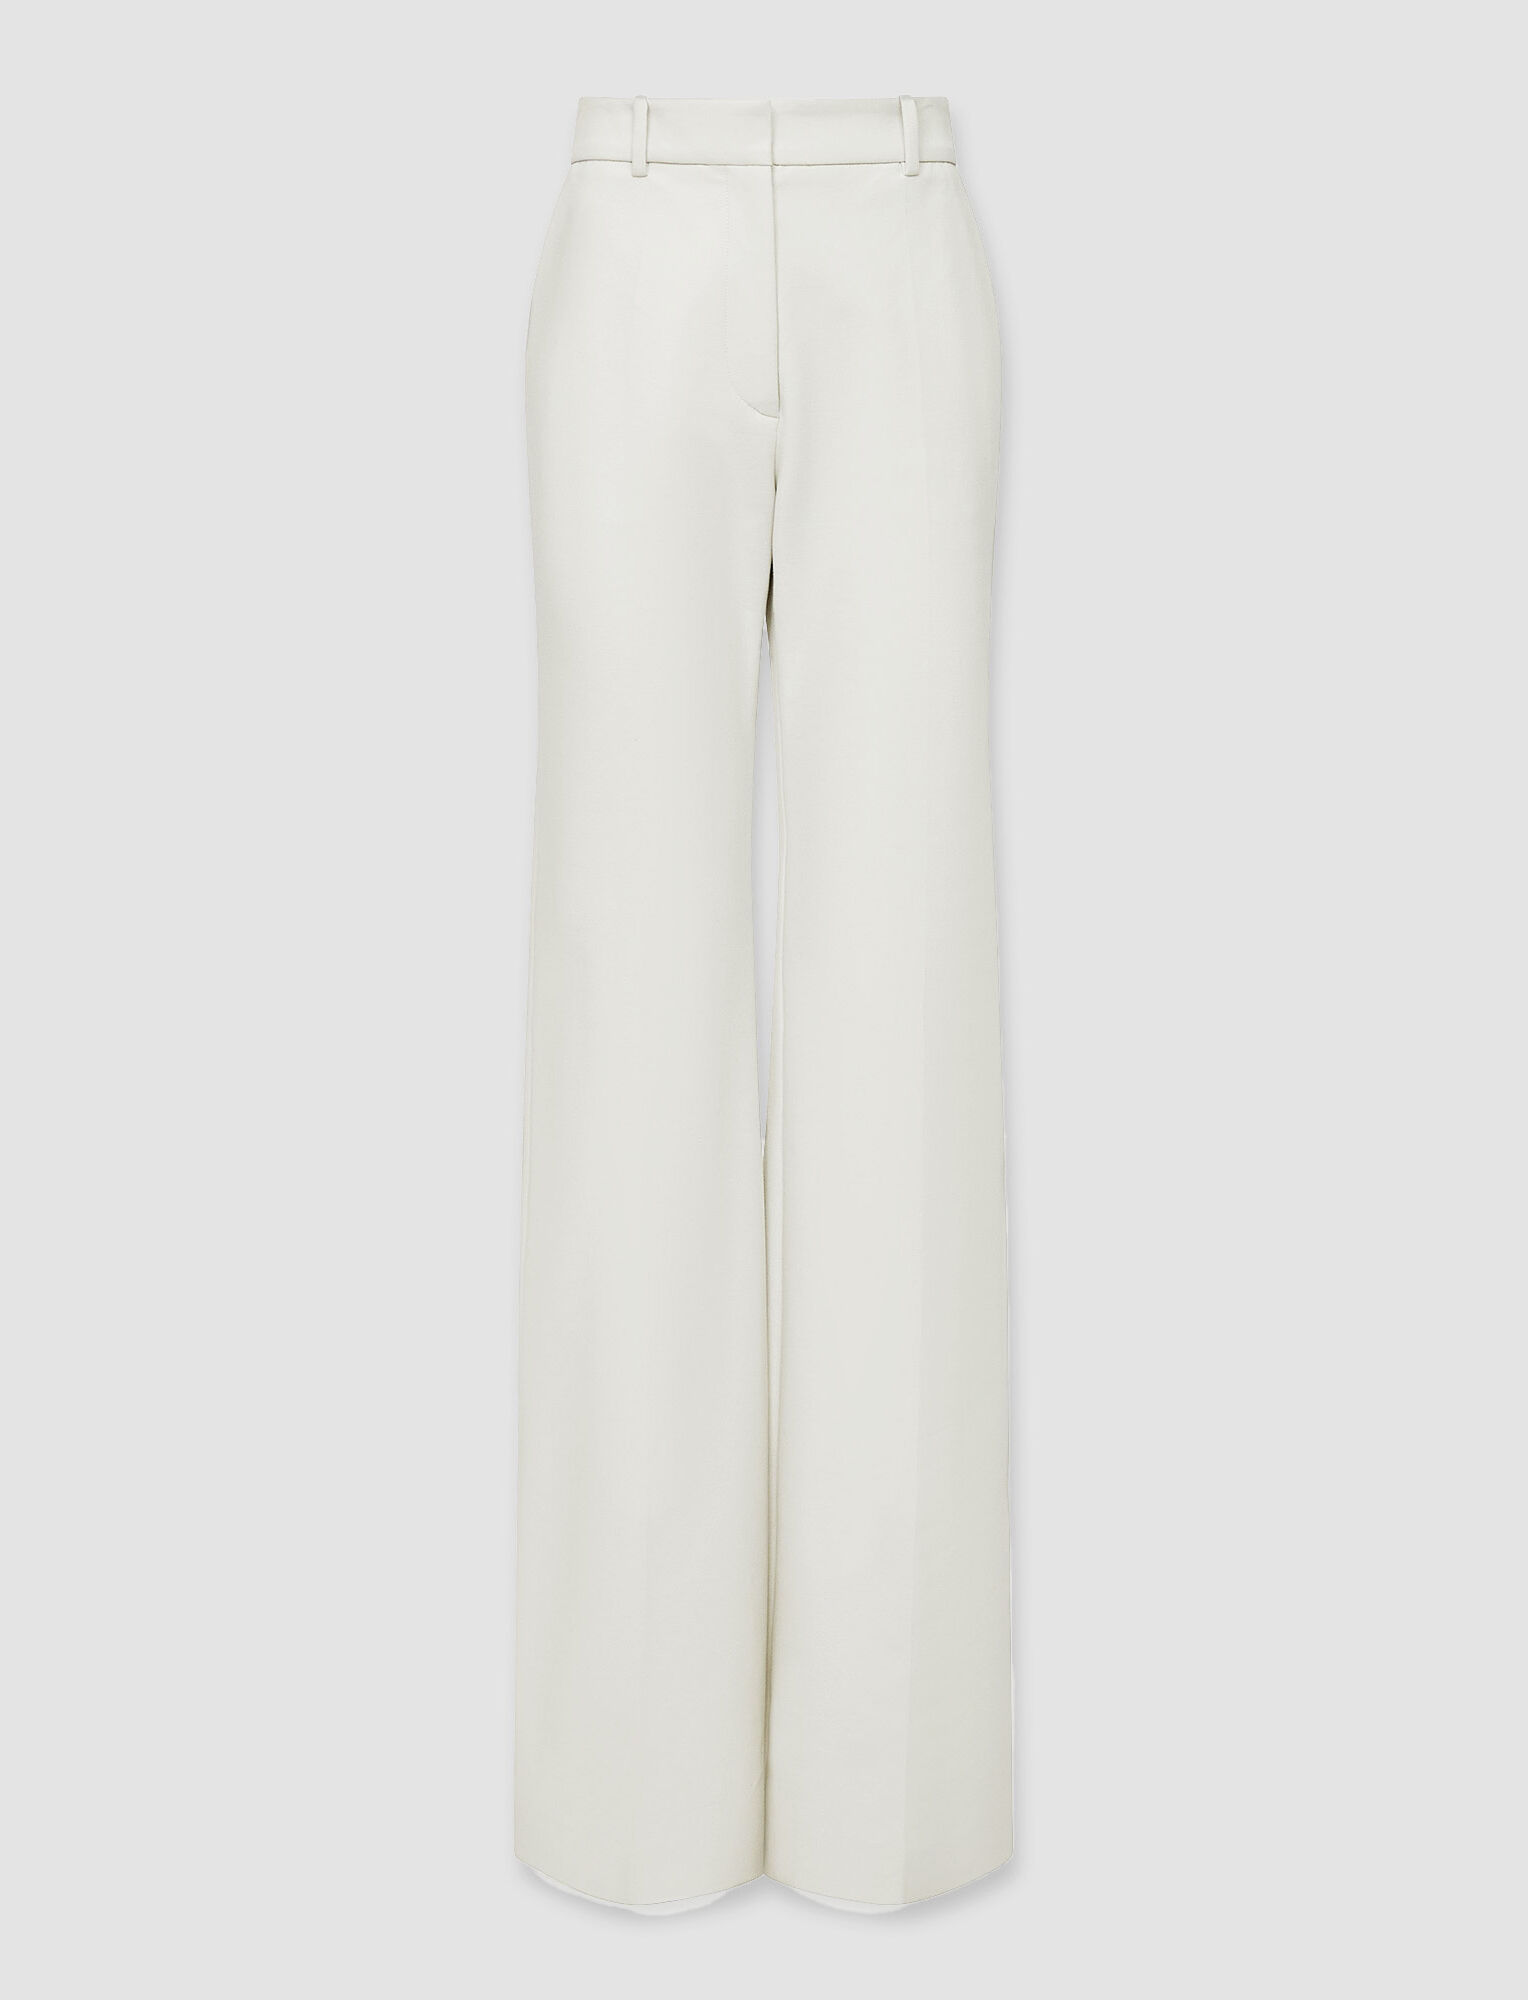 Joseph, Bi-Stretch Toile Tafira Trousers - Shorter Length, in Ivory